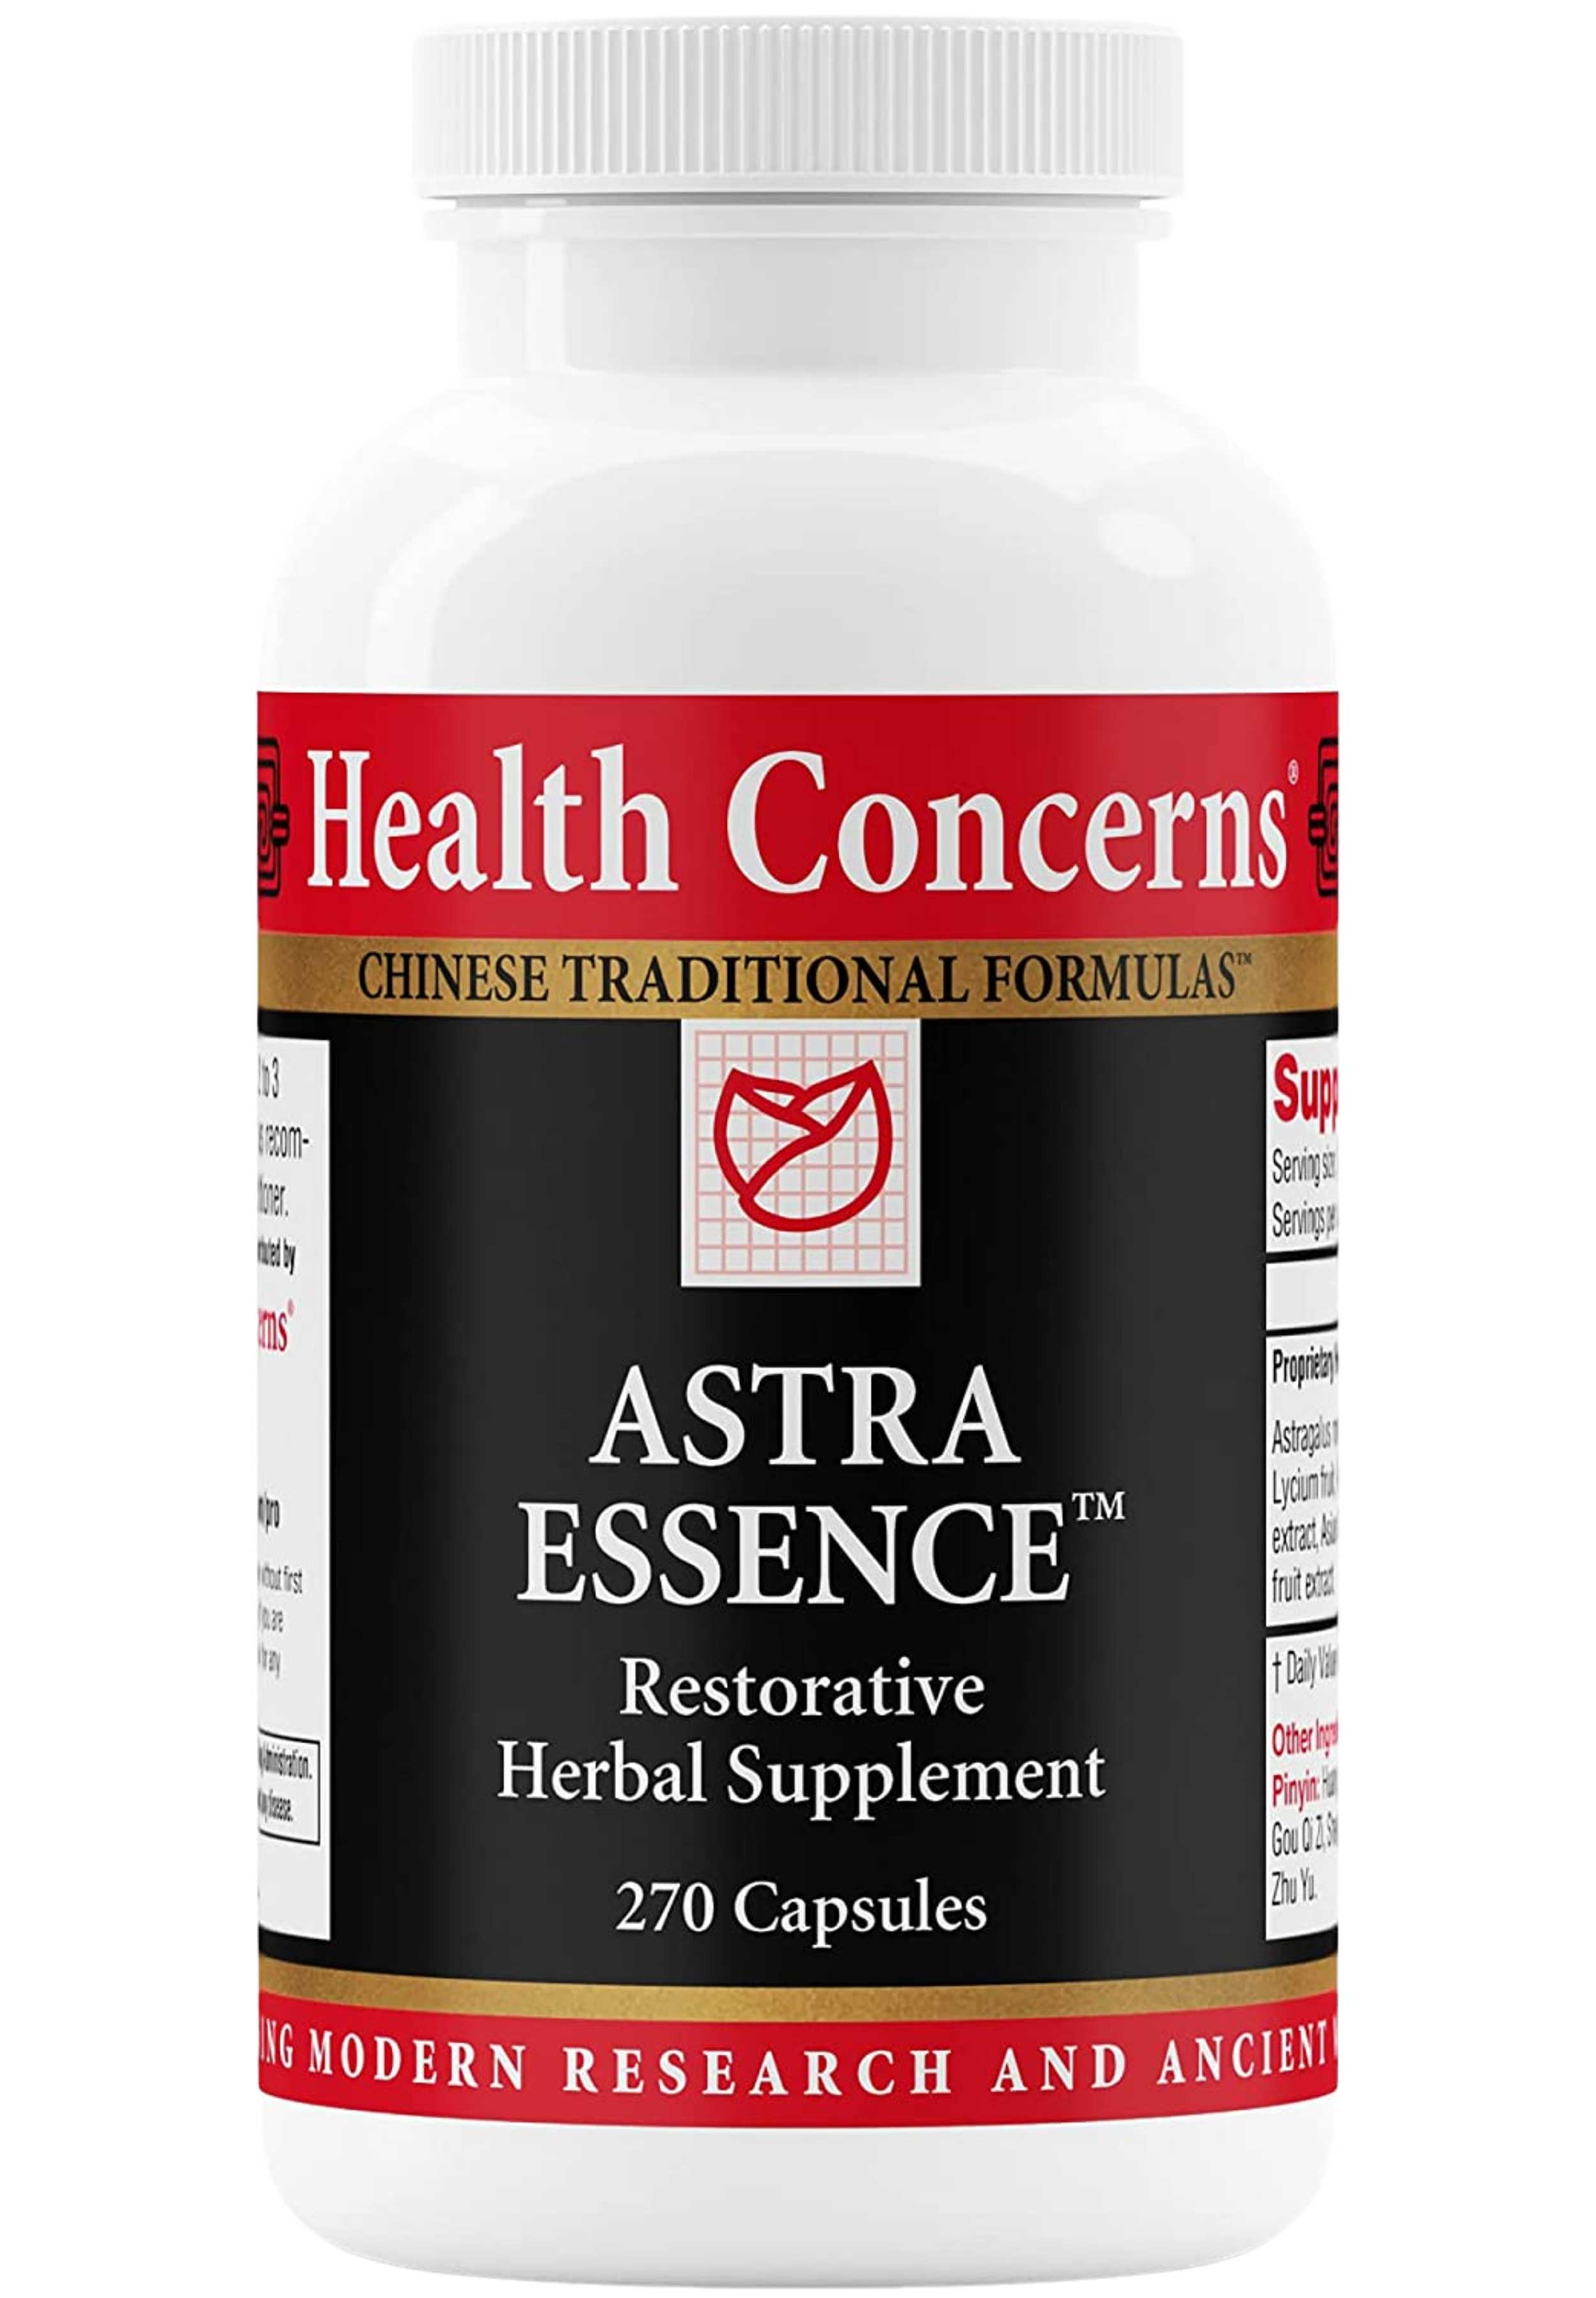 Health Concerns Astra Essence